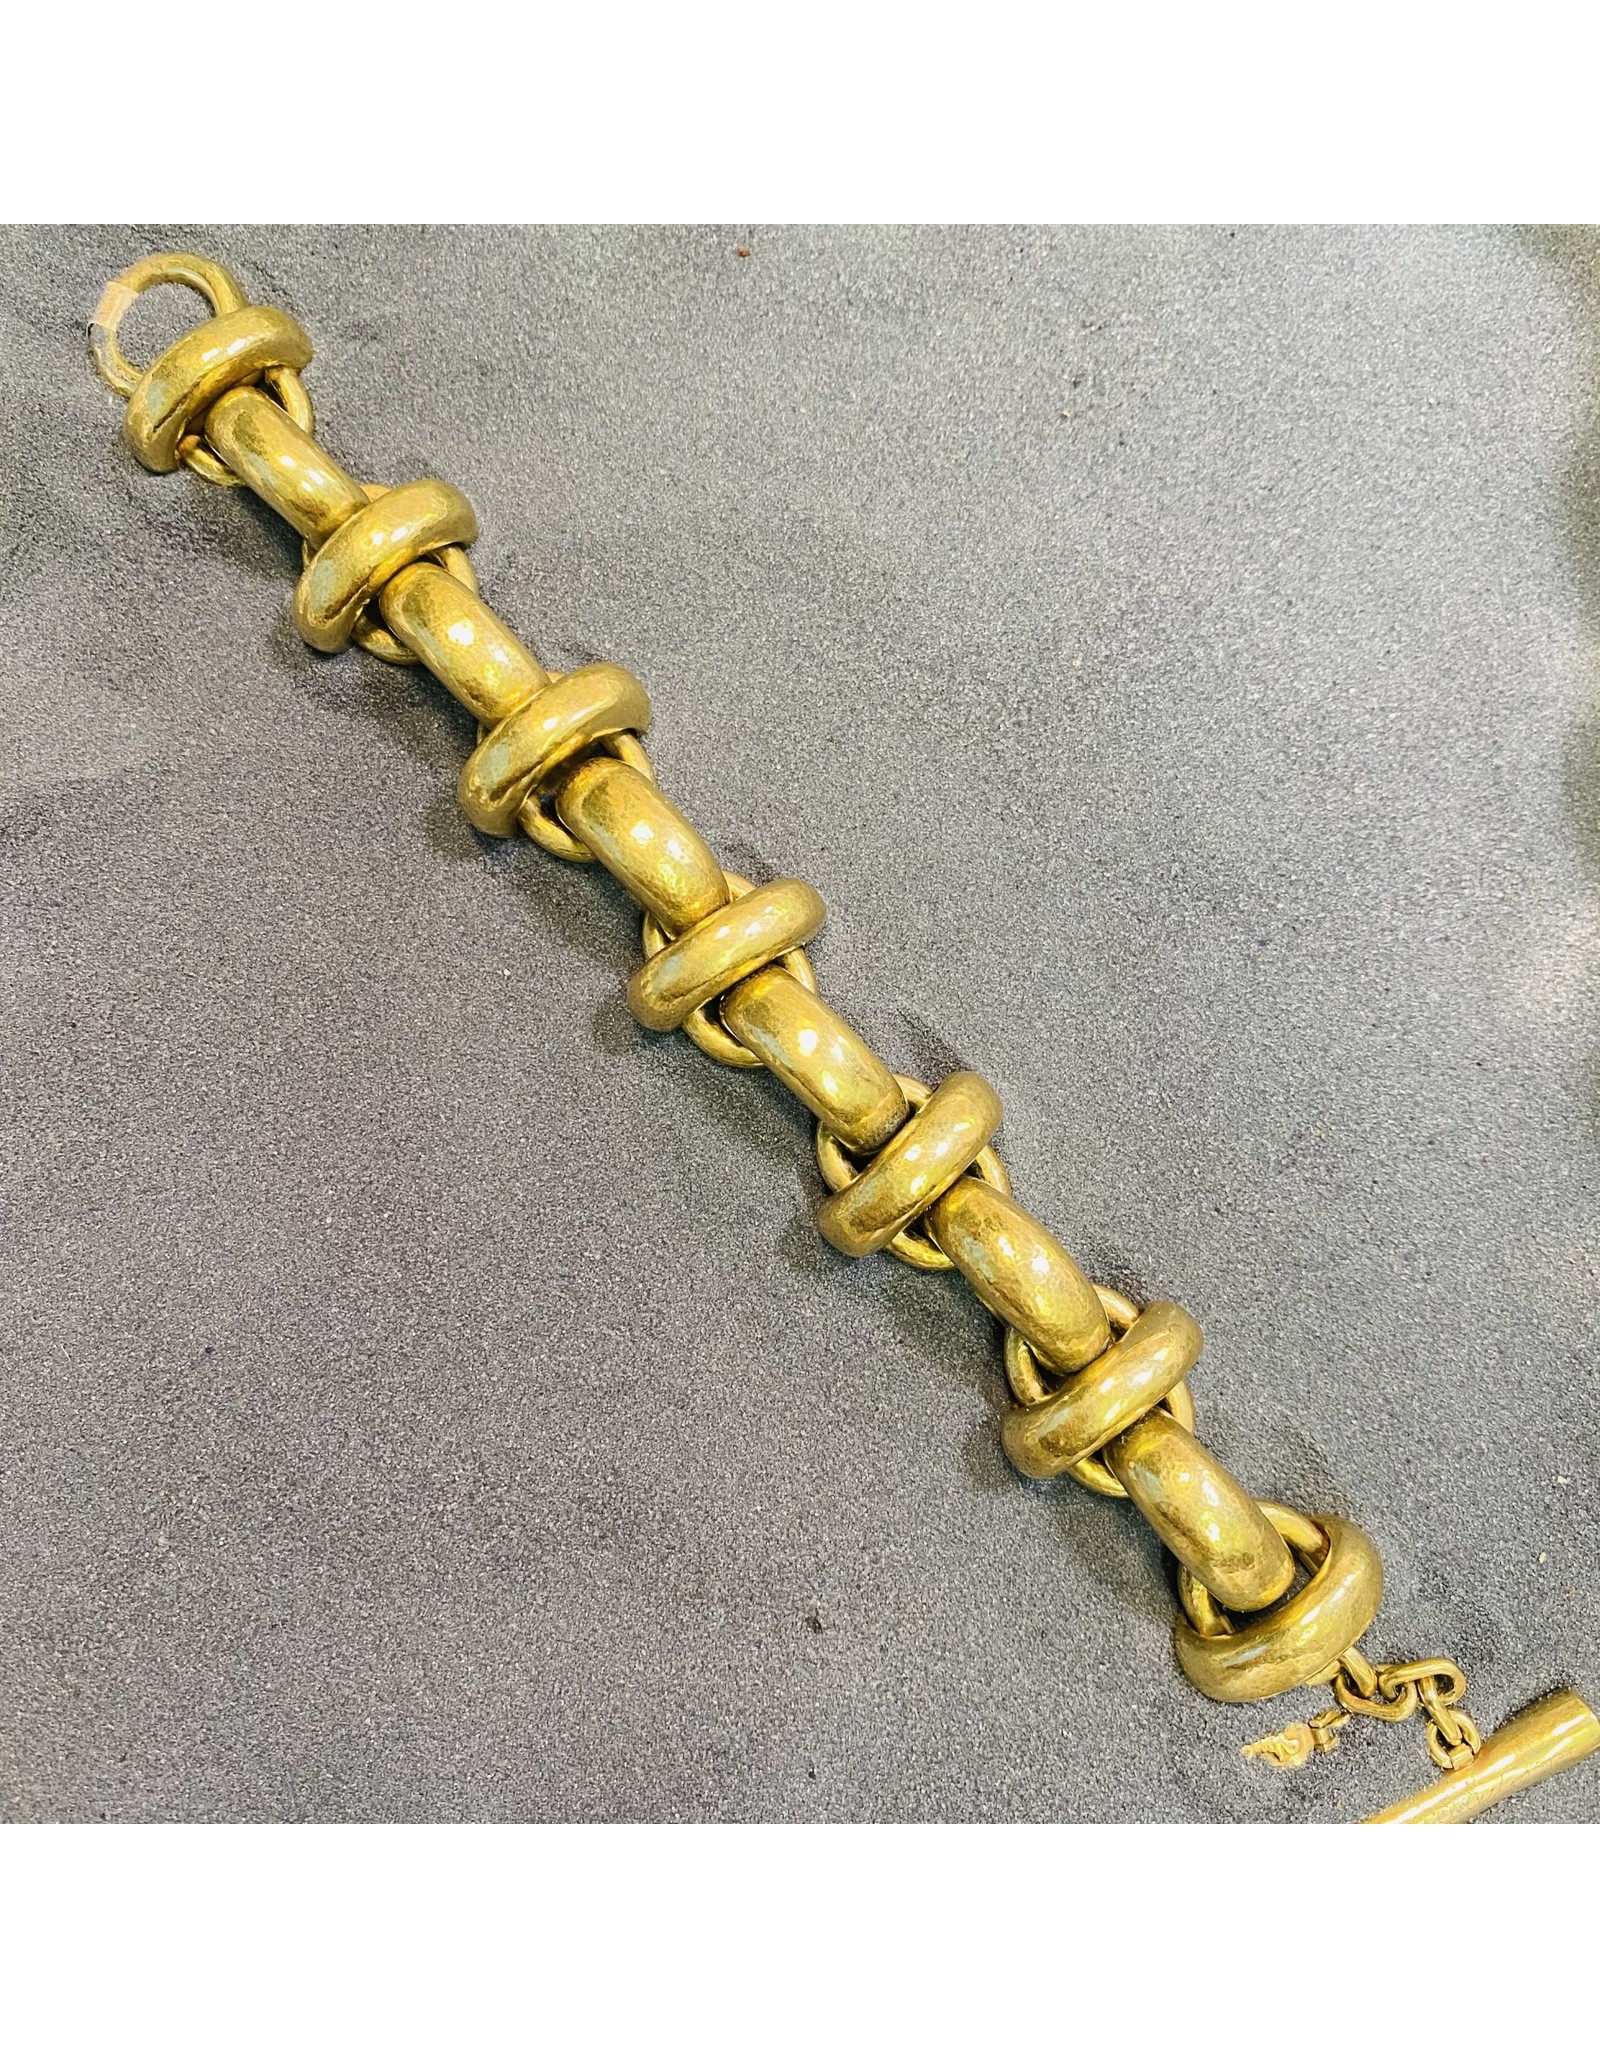 Vaubel Gold 4 Link w/ Spheres Bracelet